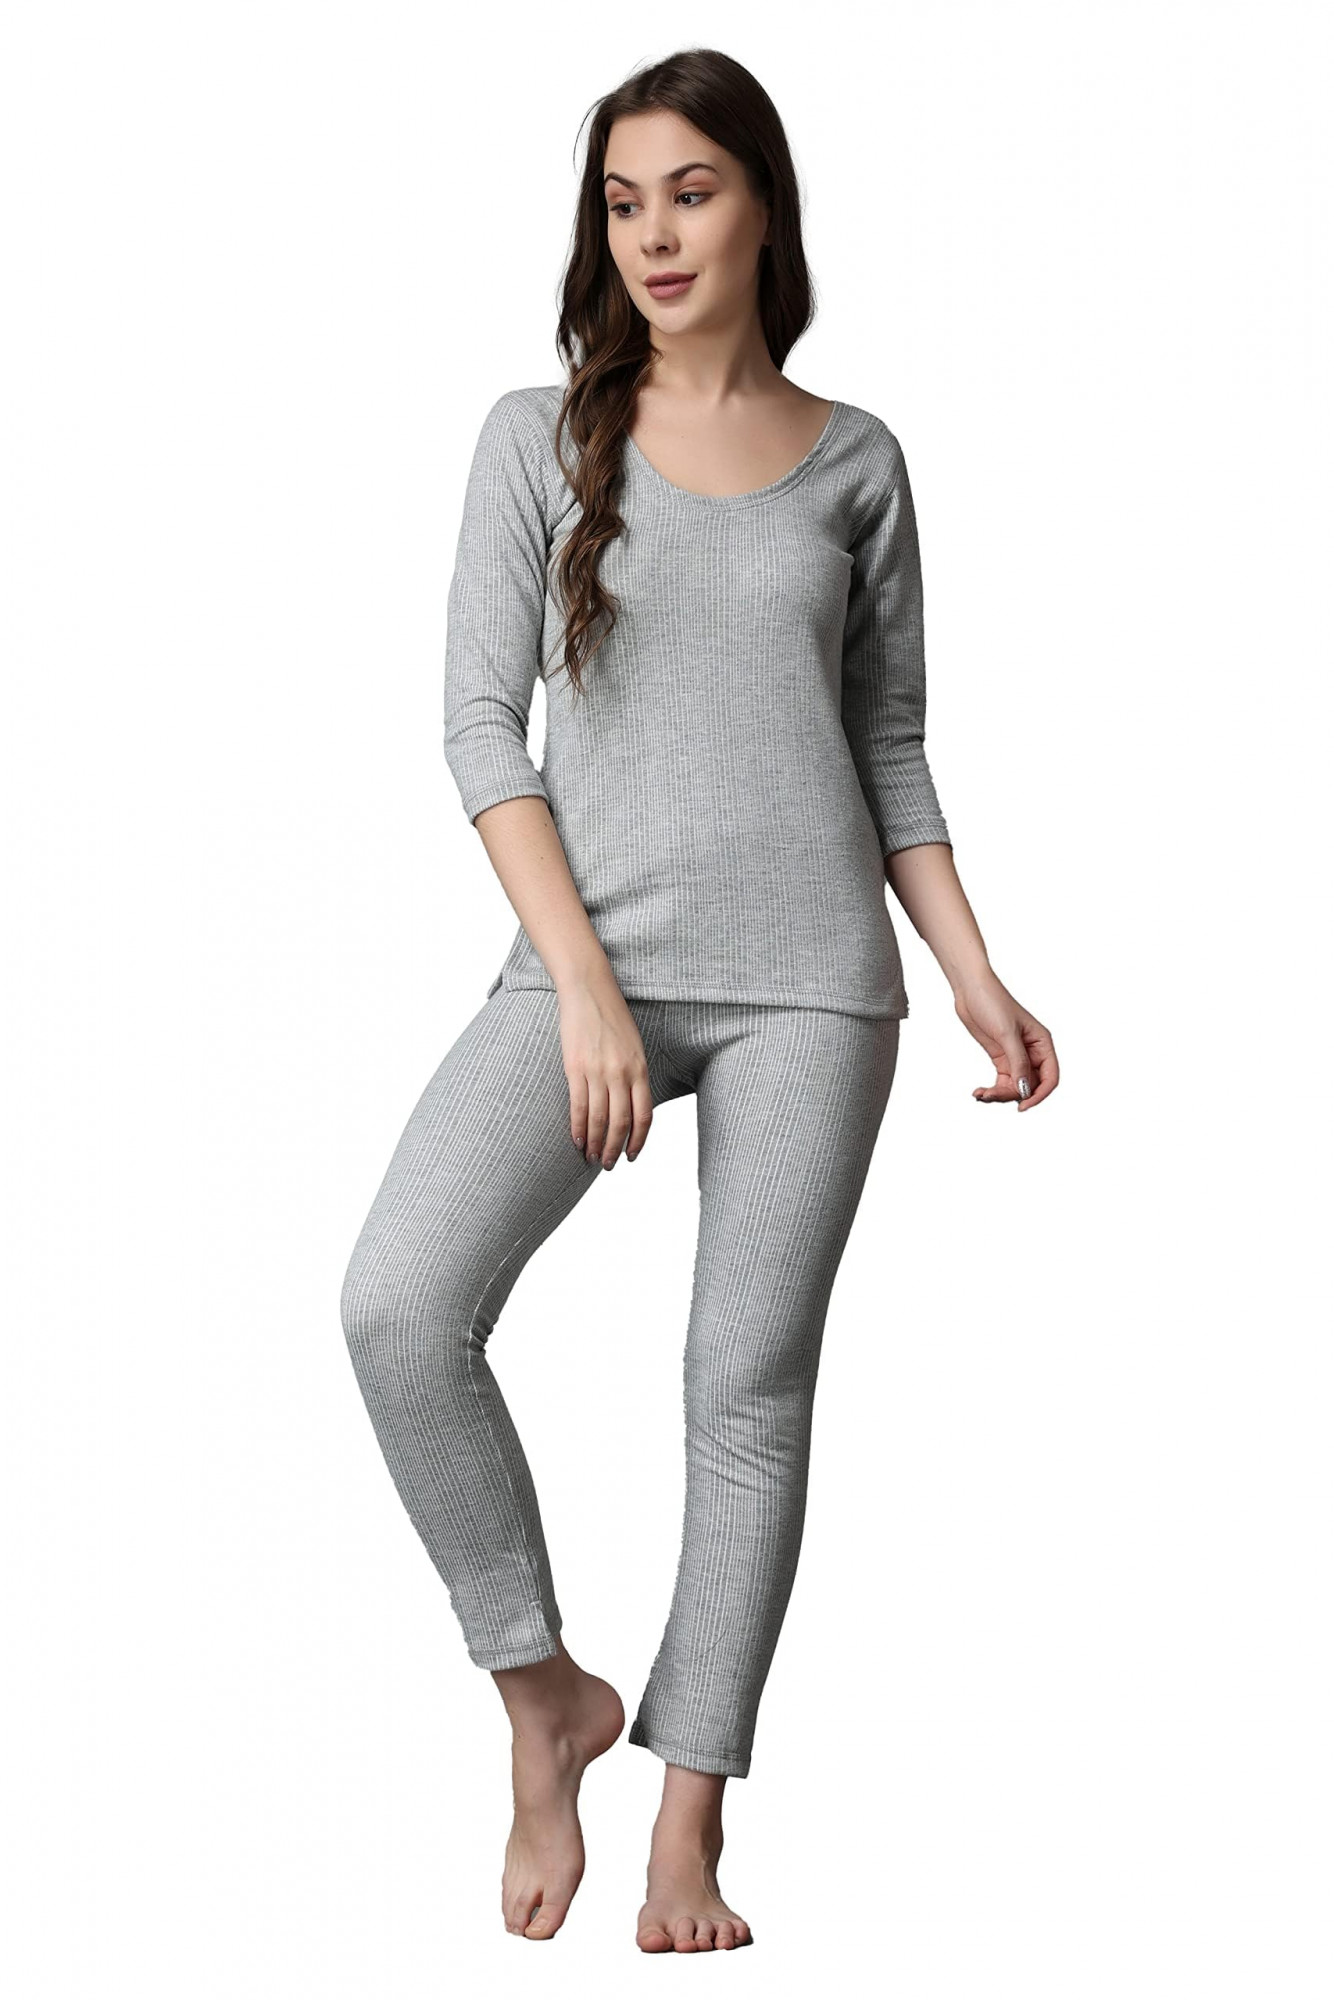 FF Winter Wear Thermal Upper Vest and Bottom Lower Warmer Combo for Women  Long Johns Underwear